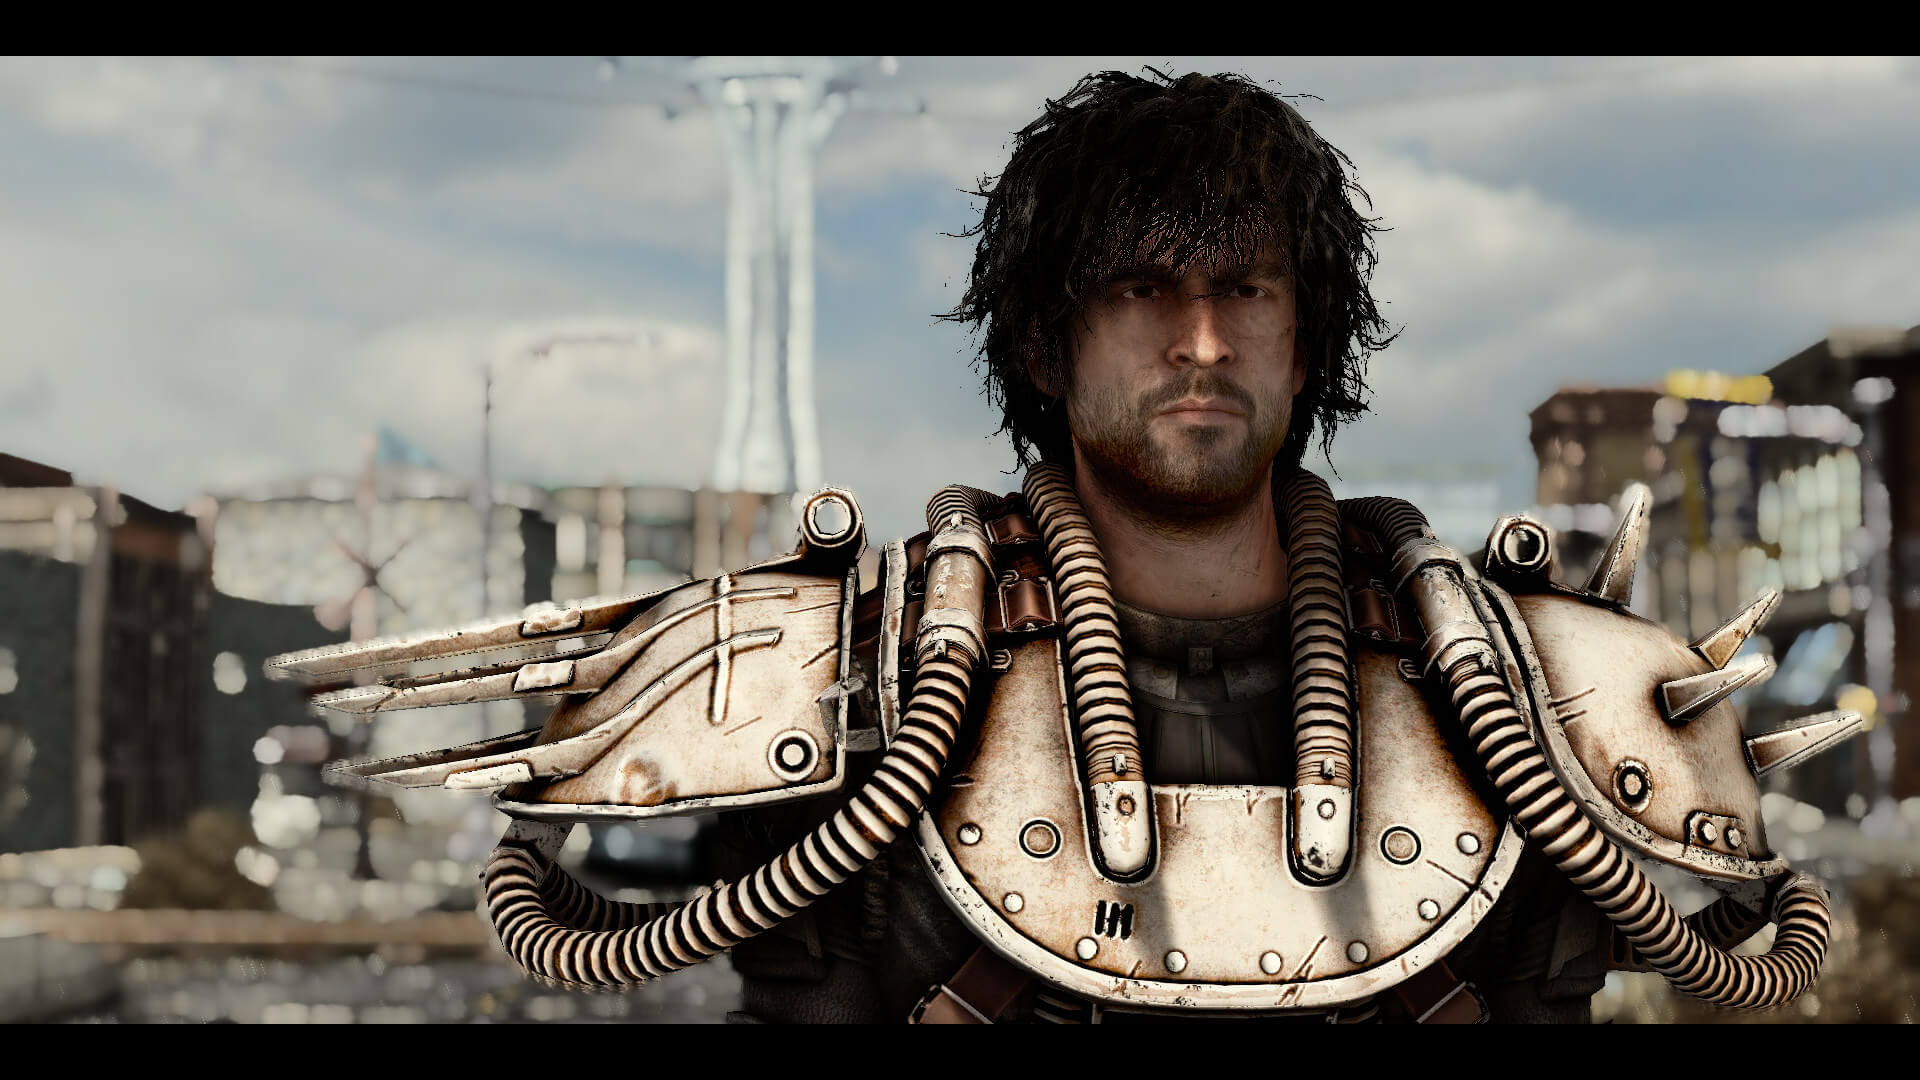 Fallout: New Vegas Remastered 2019 Mod - NPC Overhaul 4K 